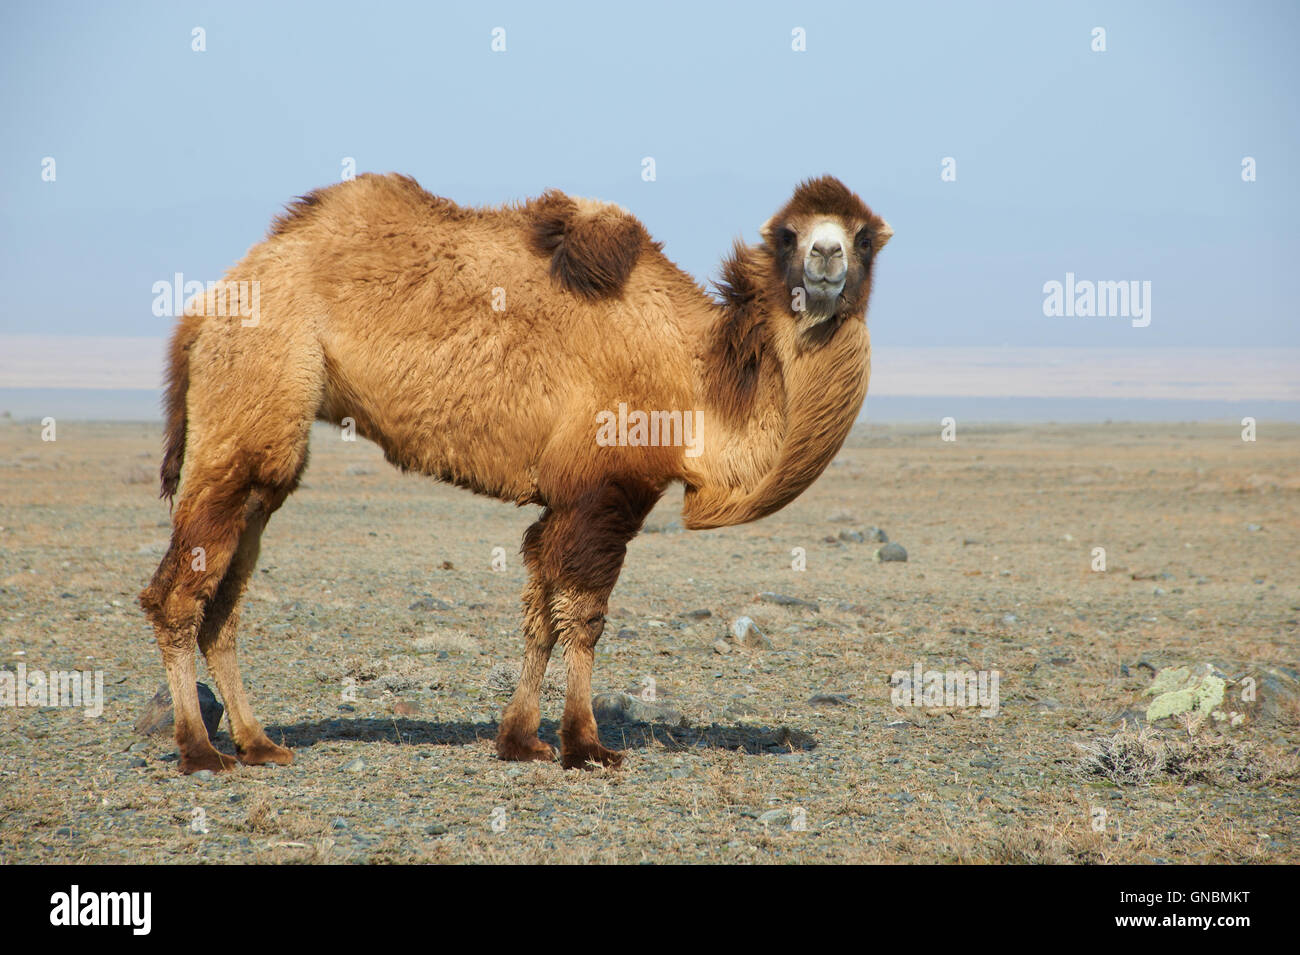 Camel in the desert Stock Photo - Alamy